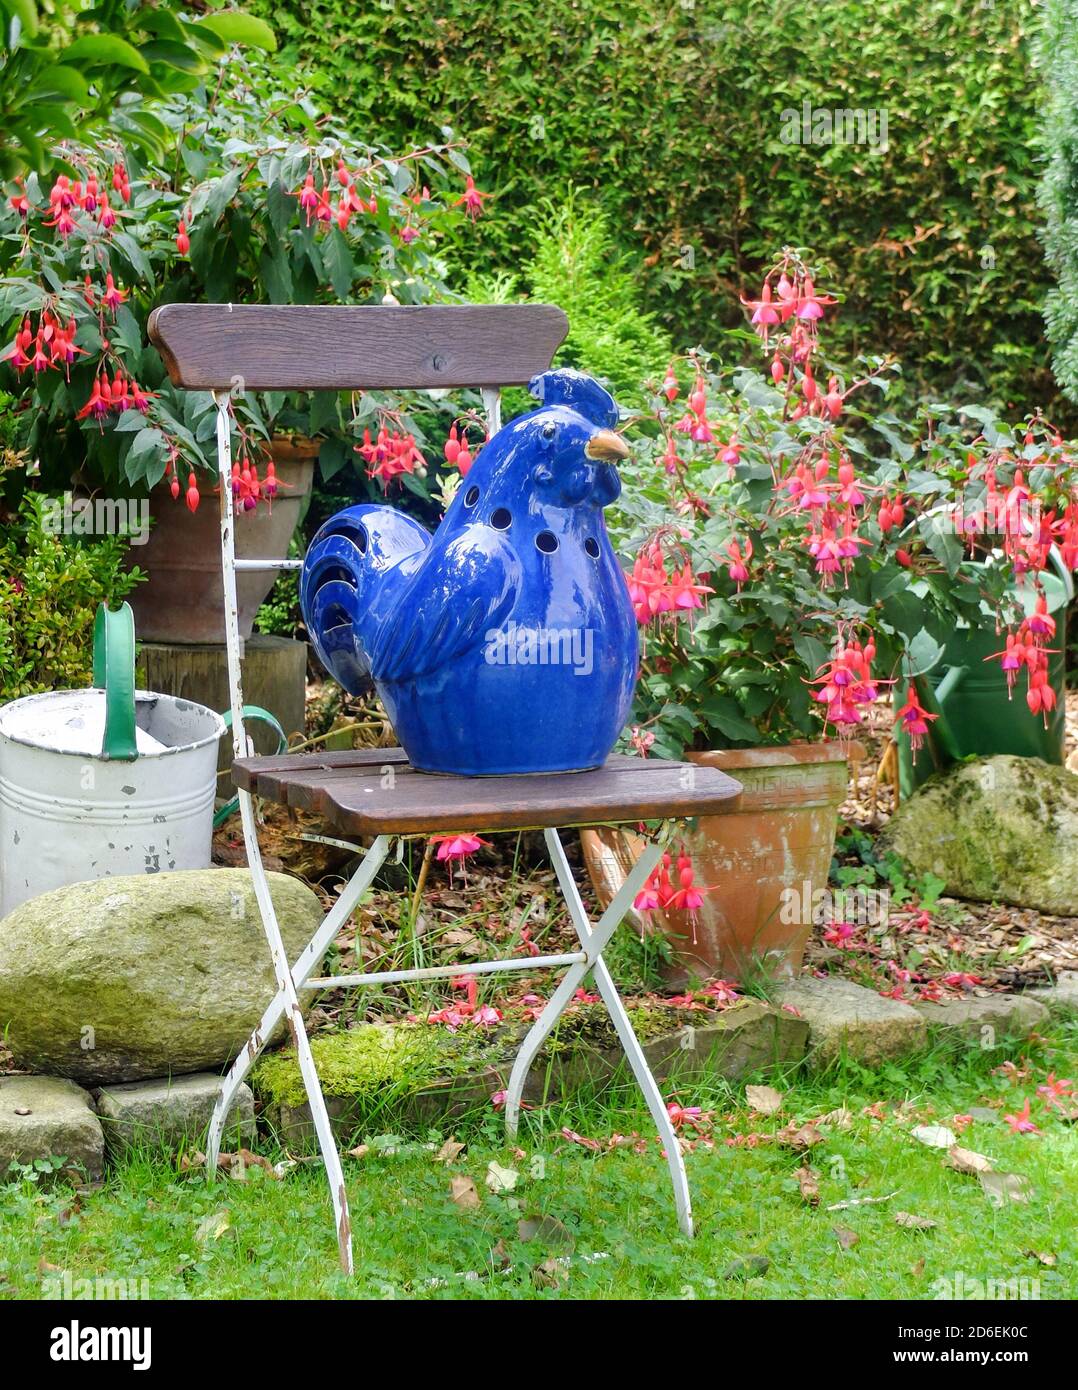 Ceramic garden decoration, blue bird on the chair Stock Photo